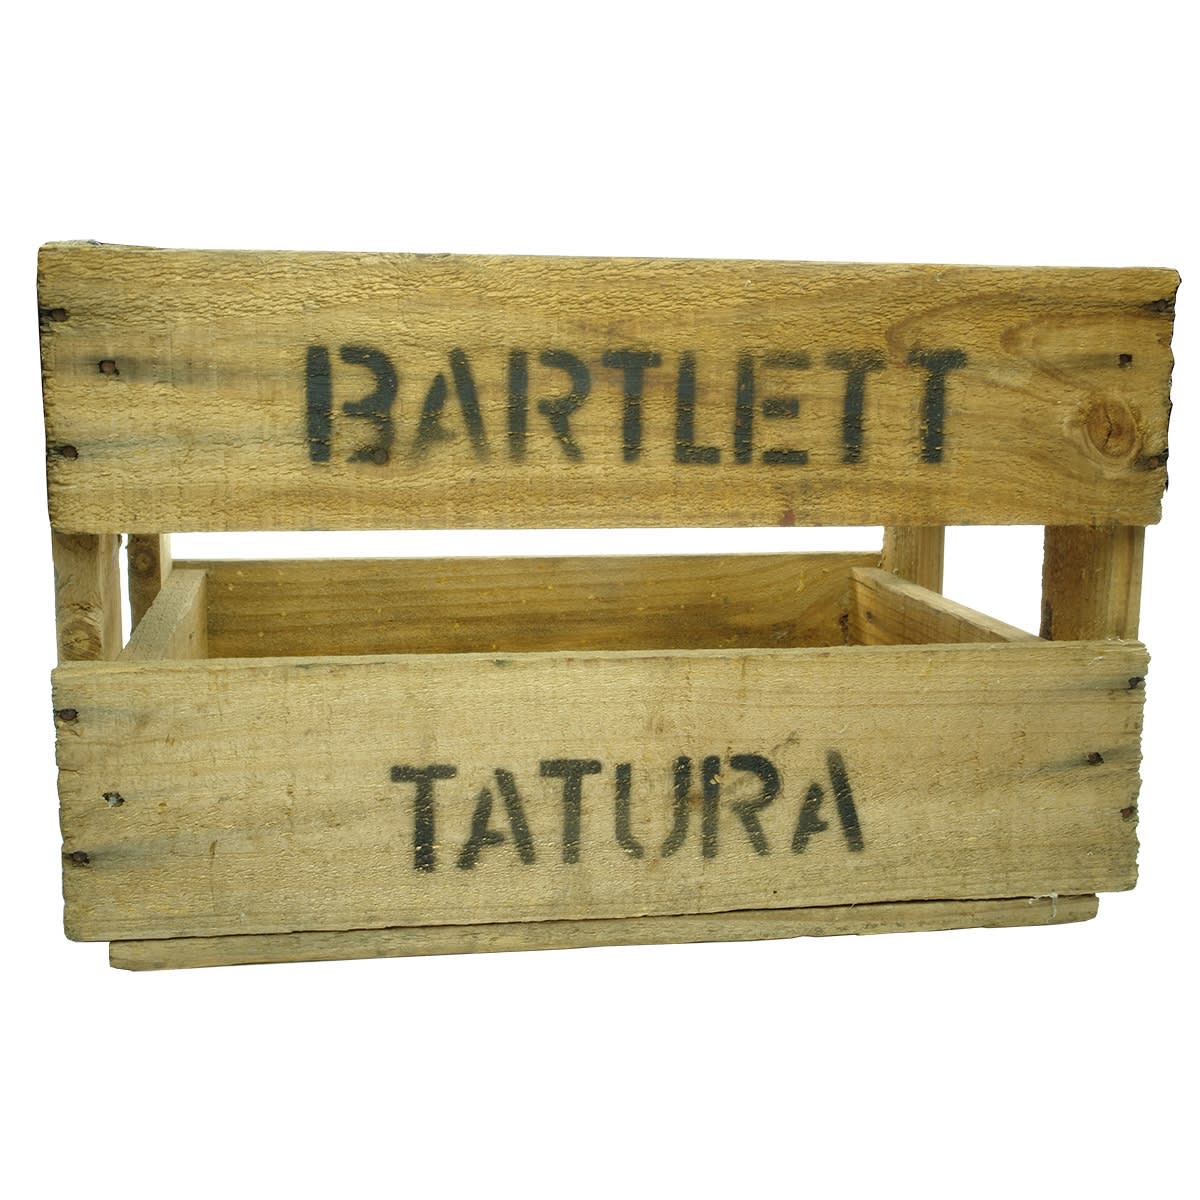 Crate. Bartlett, Tatura. (Victoria)